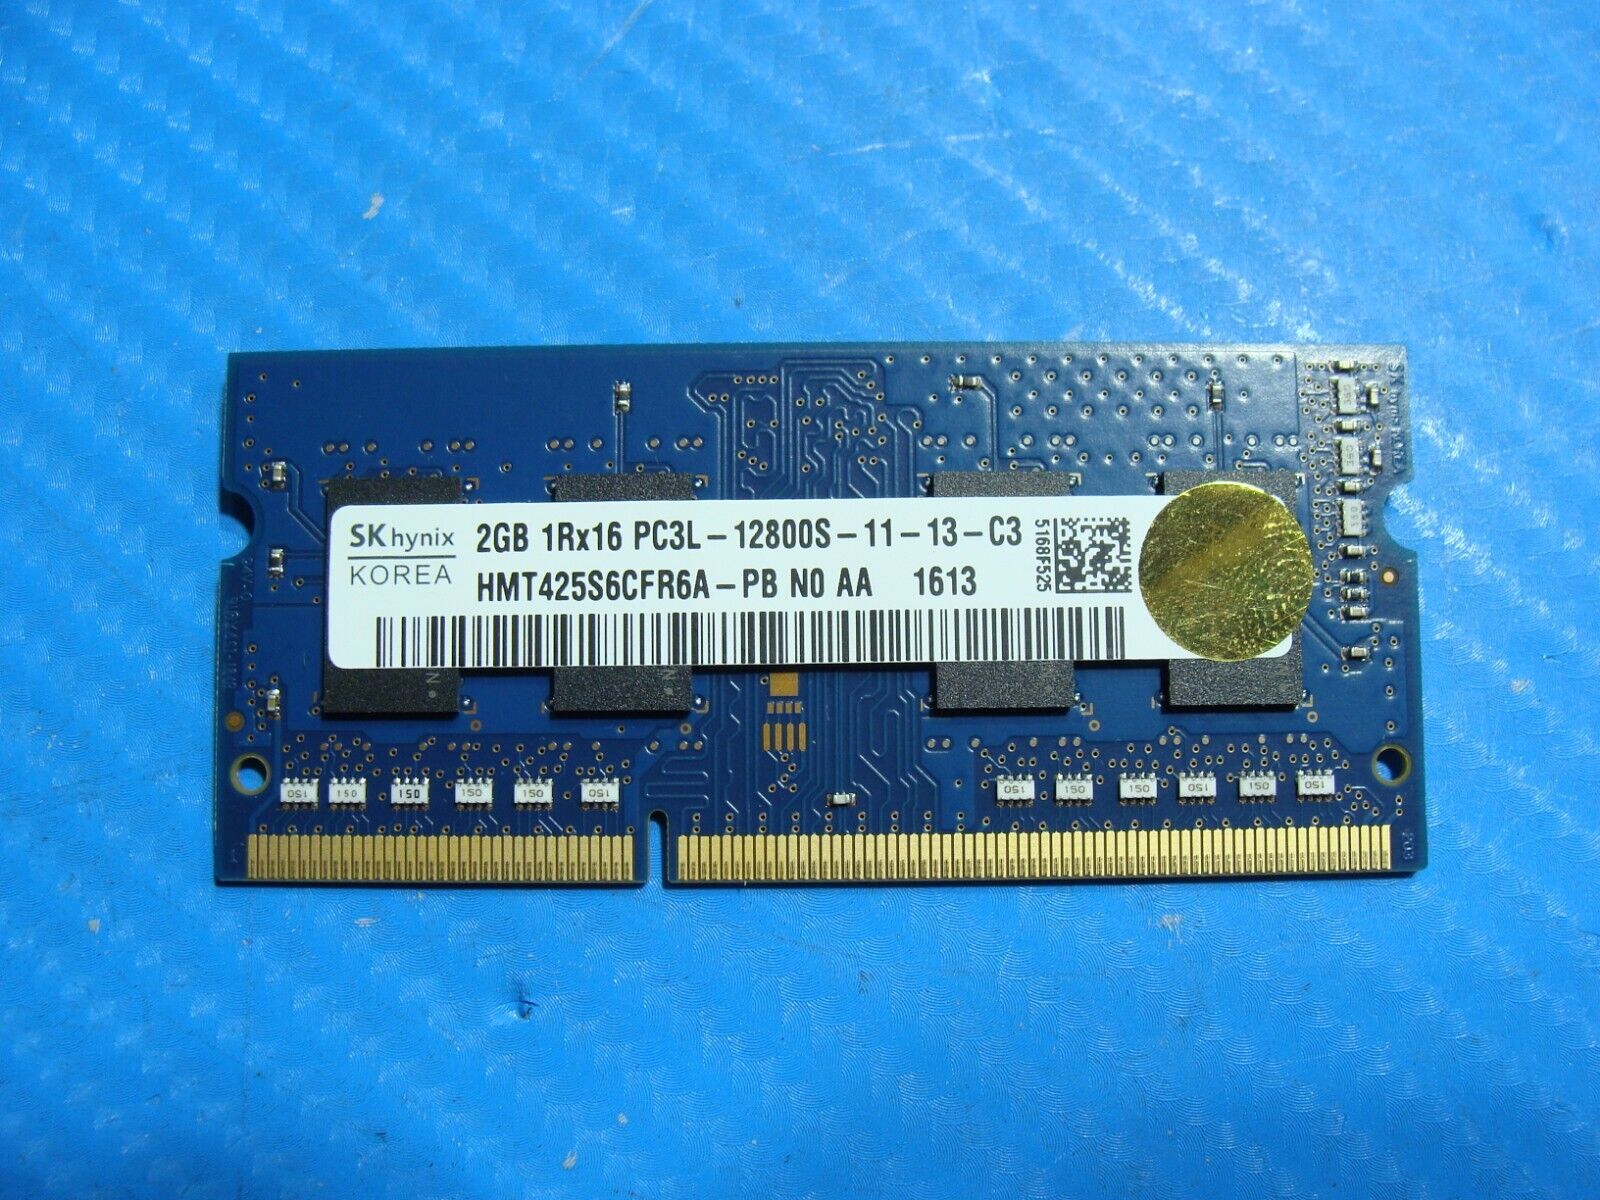 LG 22CV241 So-Dimm Hynix 2Gb 1Rx16 Memory PC3L-12800S HMT425S6CFR6A-PB